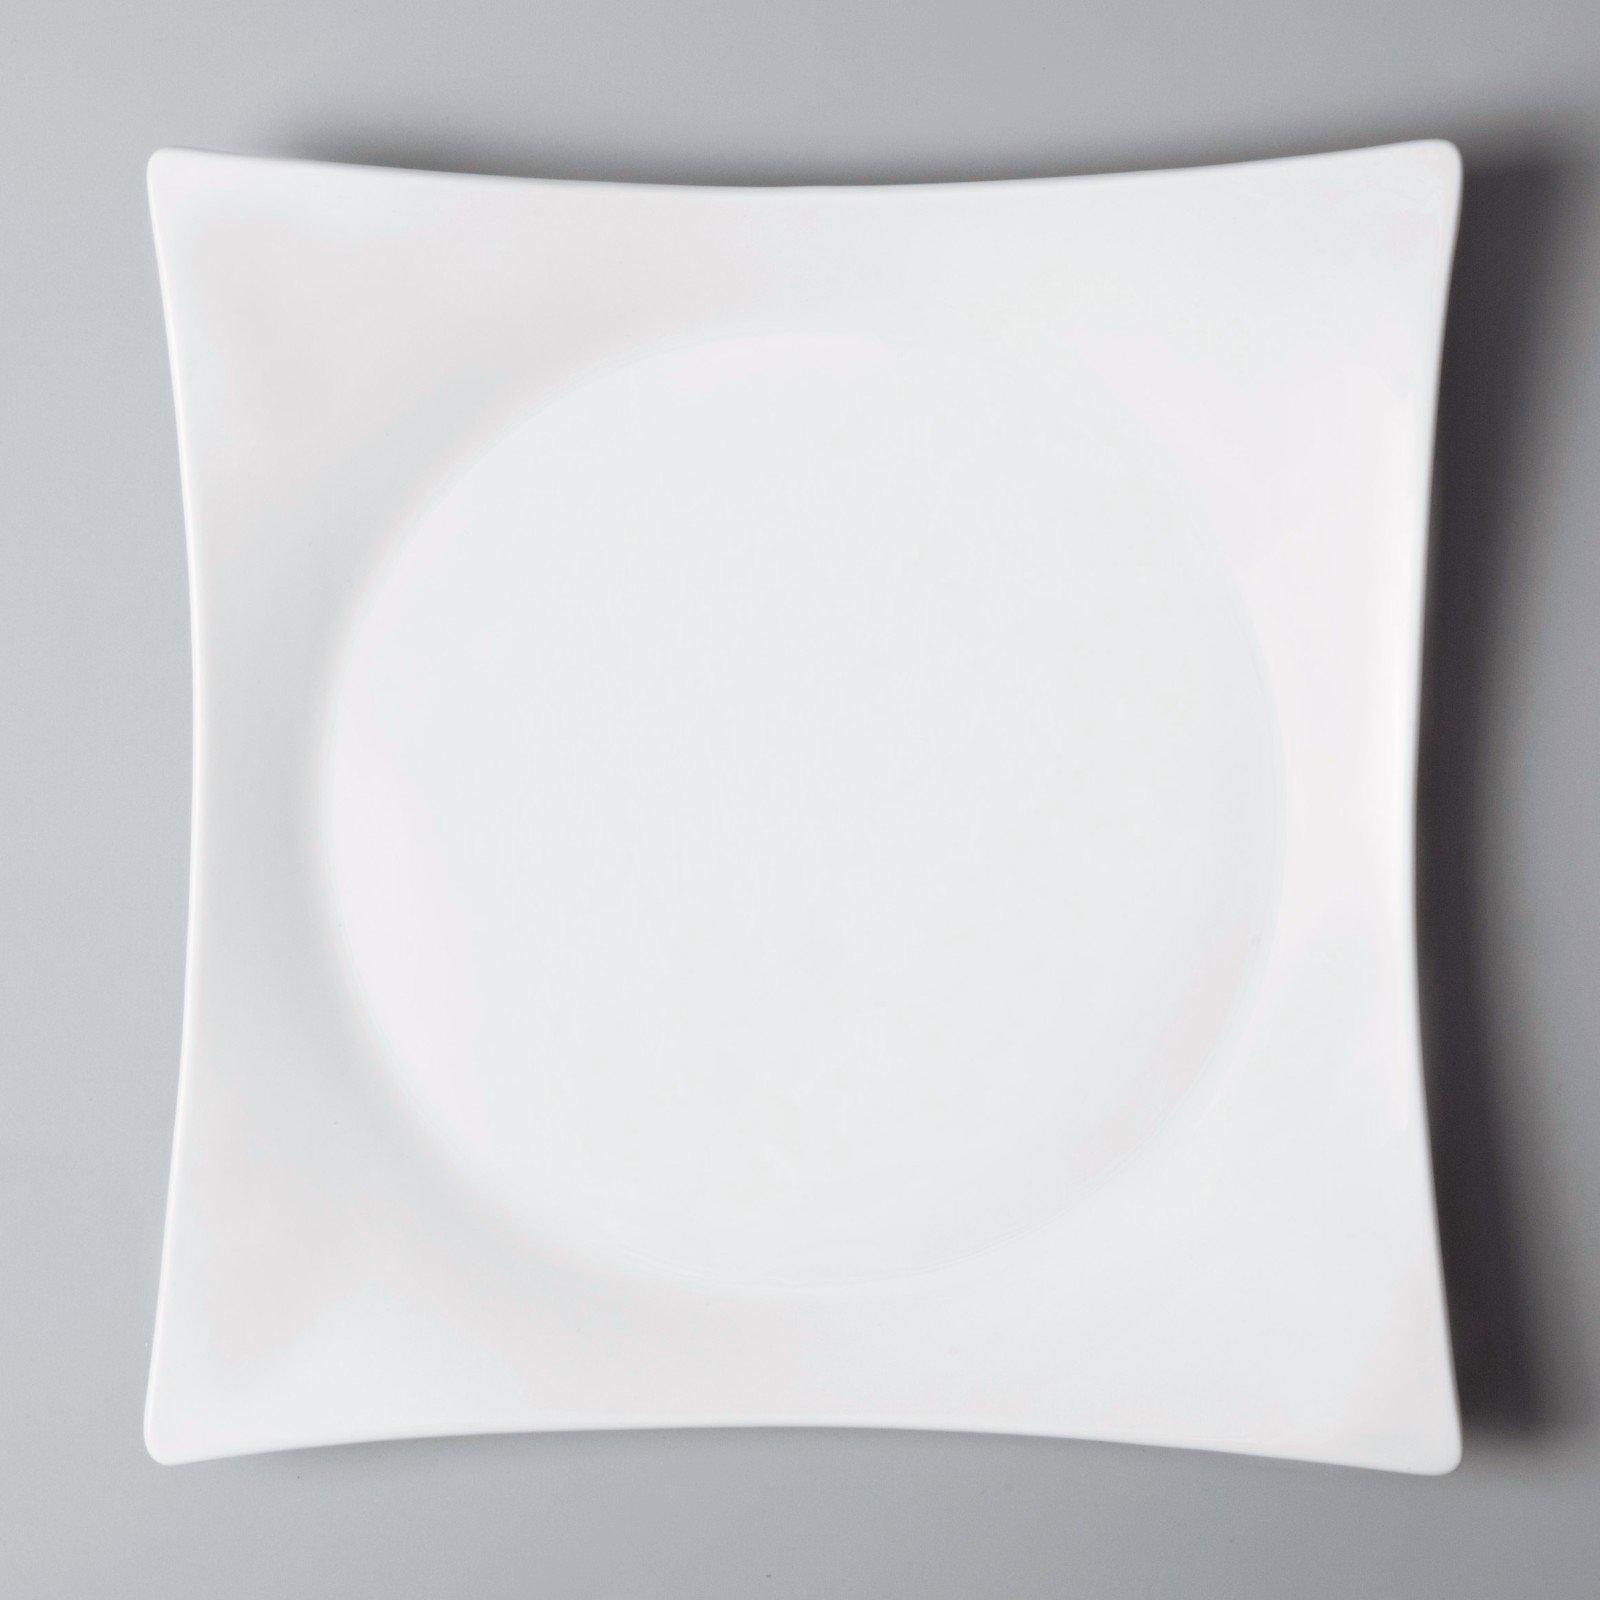 smoothly restaurant dinner plates cheap manufacturer for restaurant Two Eight-2